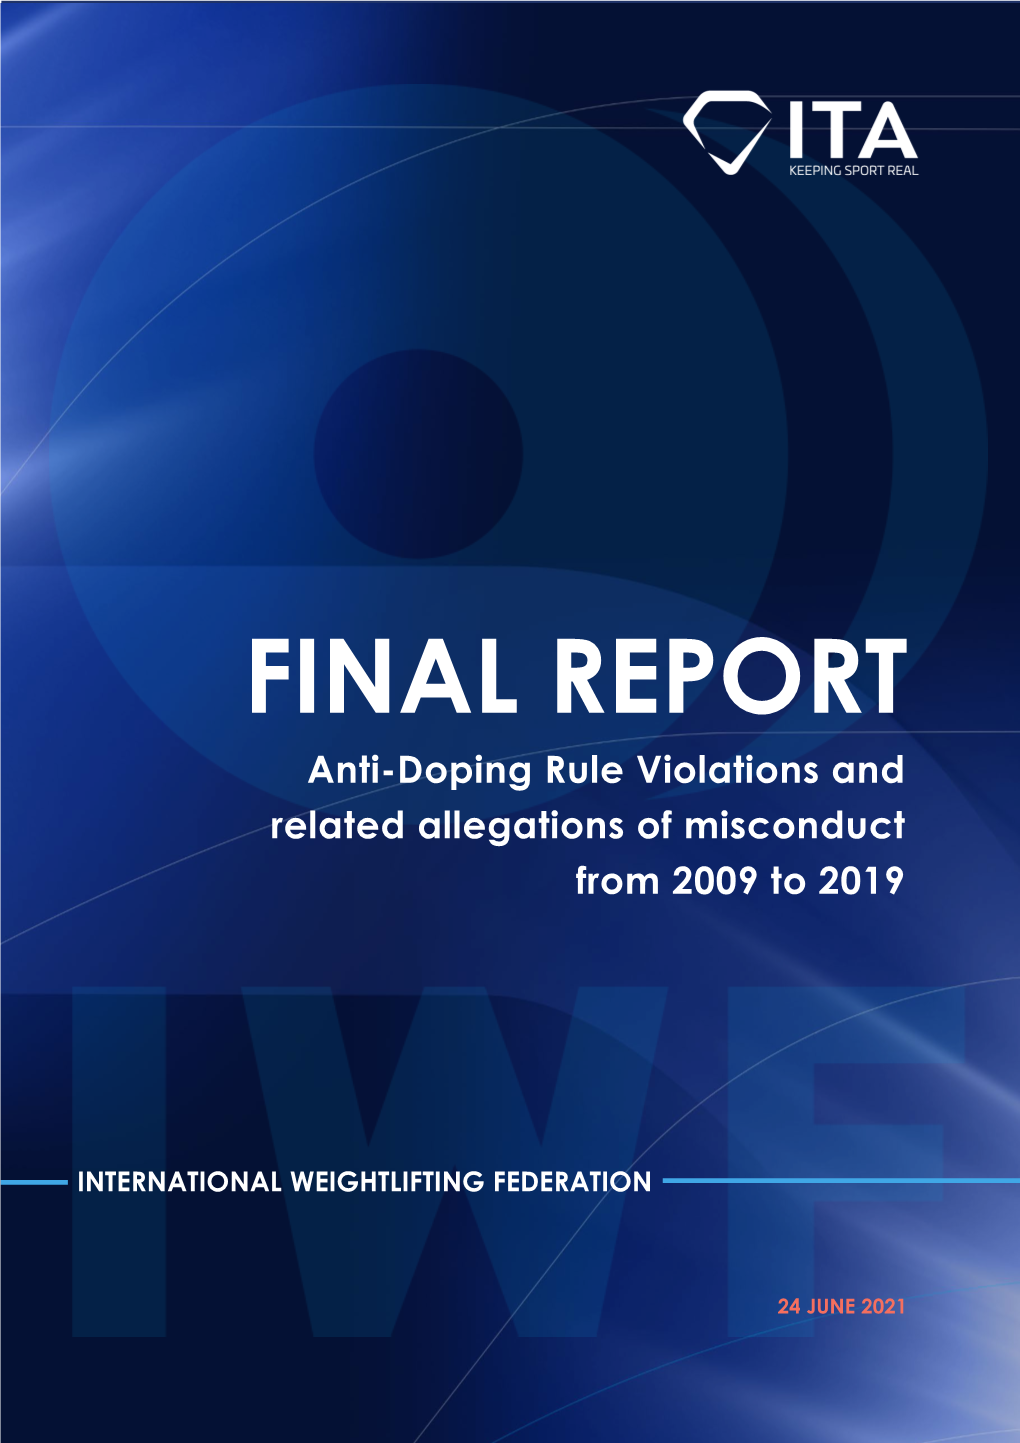 ITA-Final-Report-On-IWF.Pdf